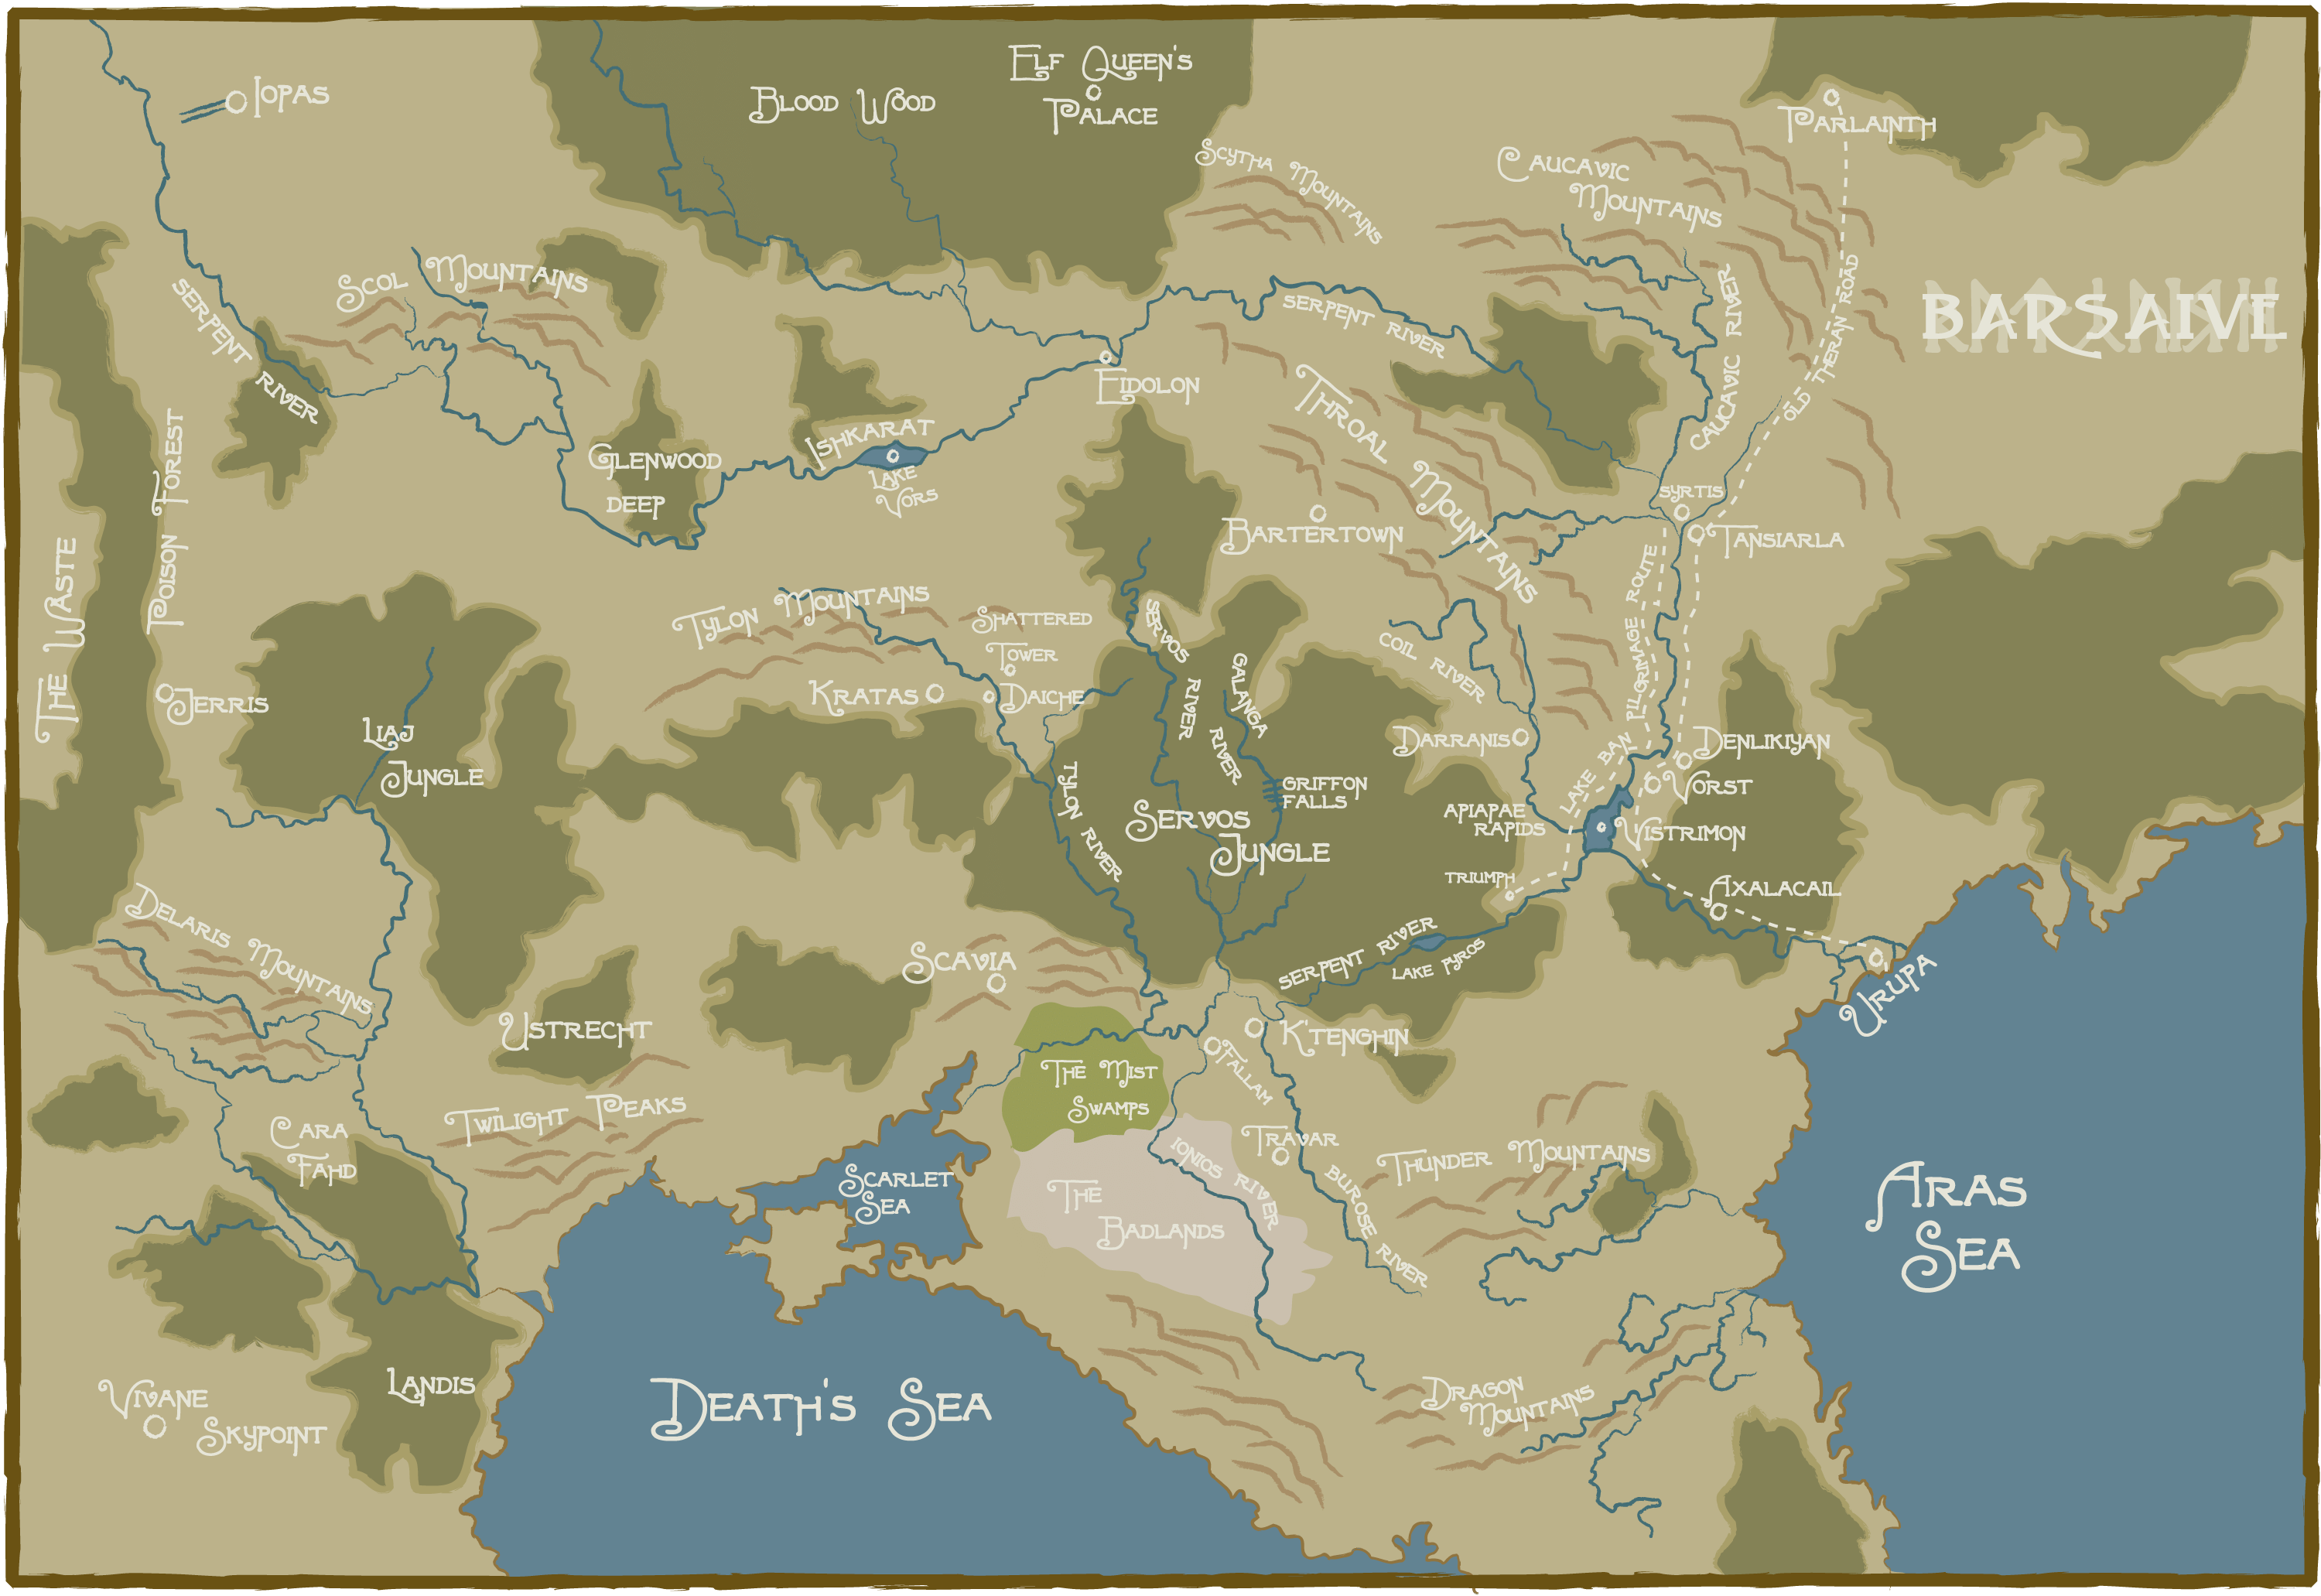 Earthdawn: Map of Barsaive by digitalsushi